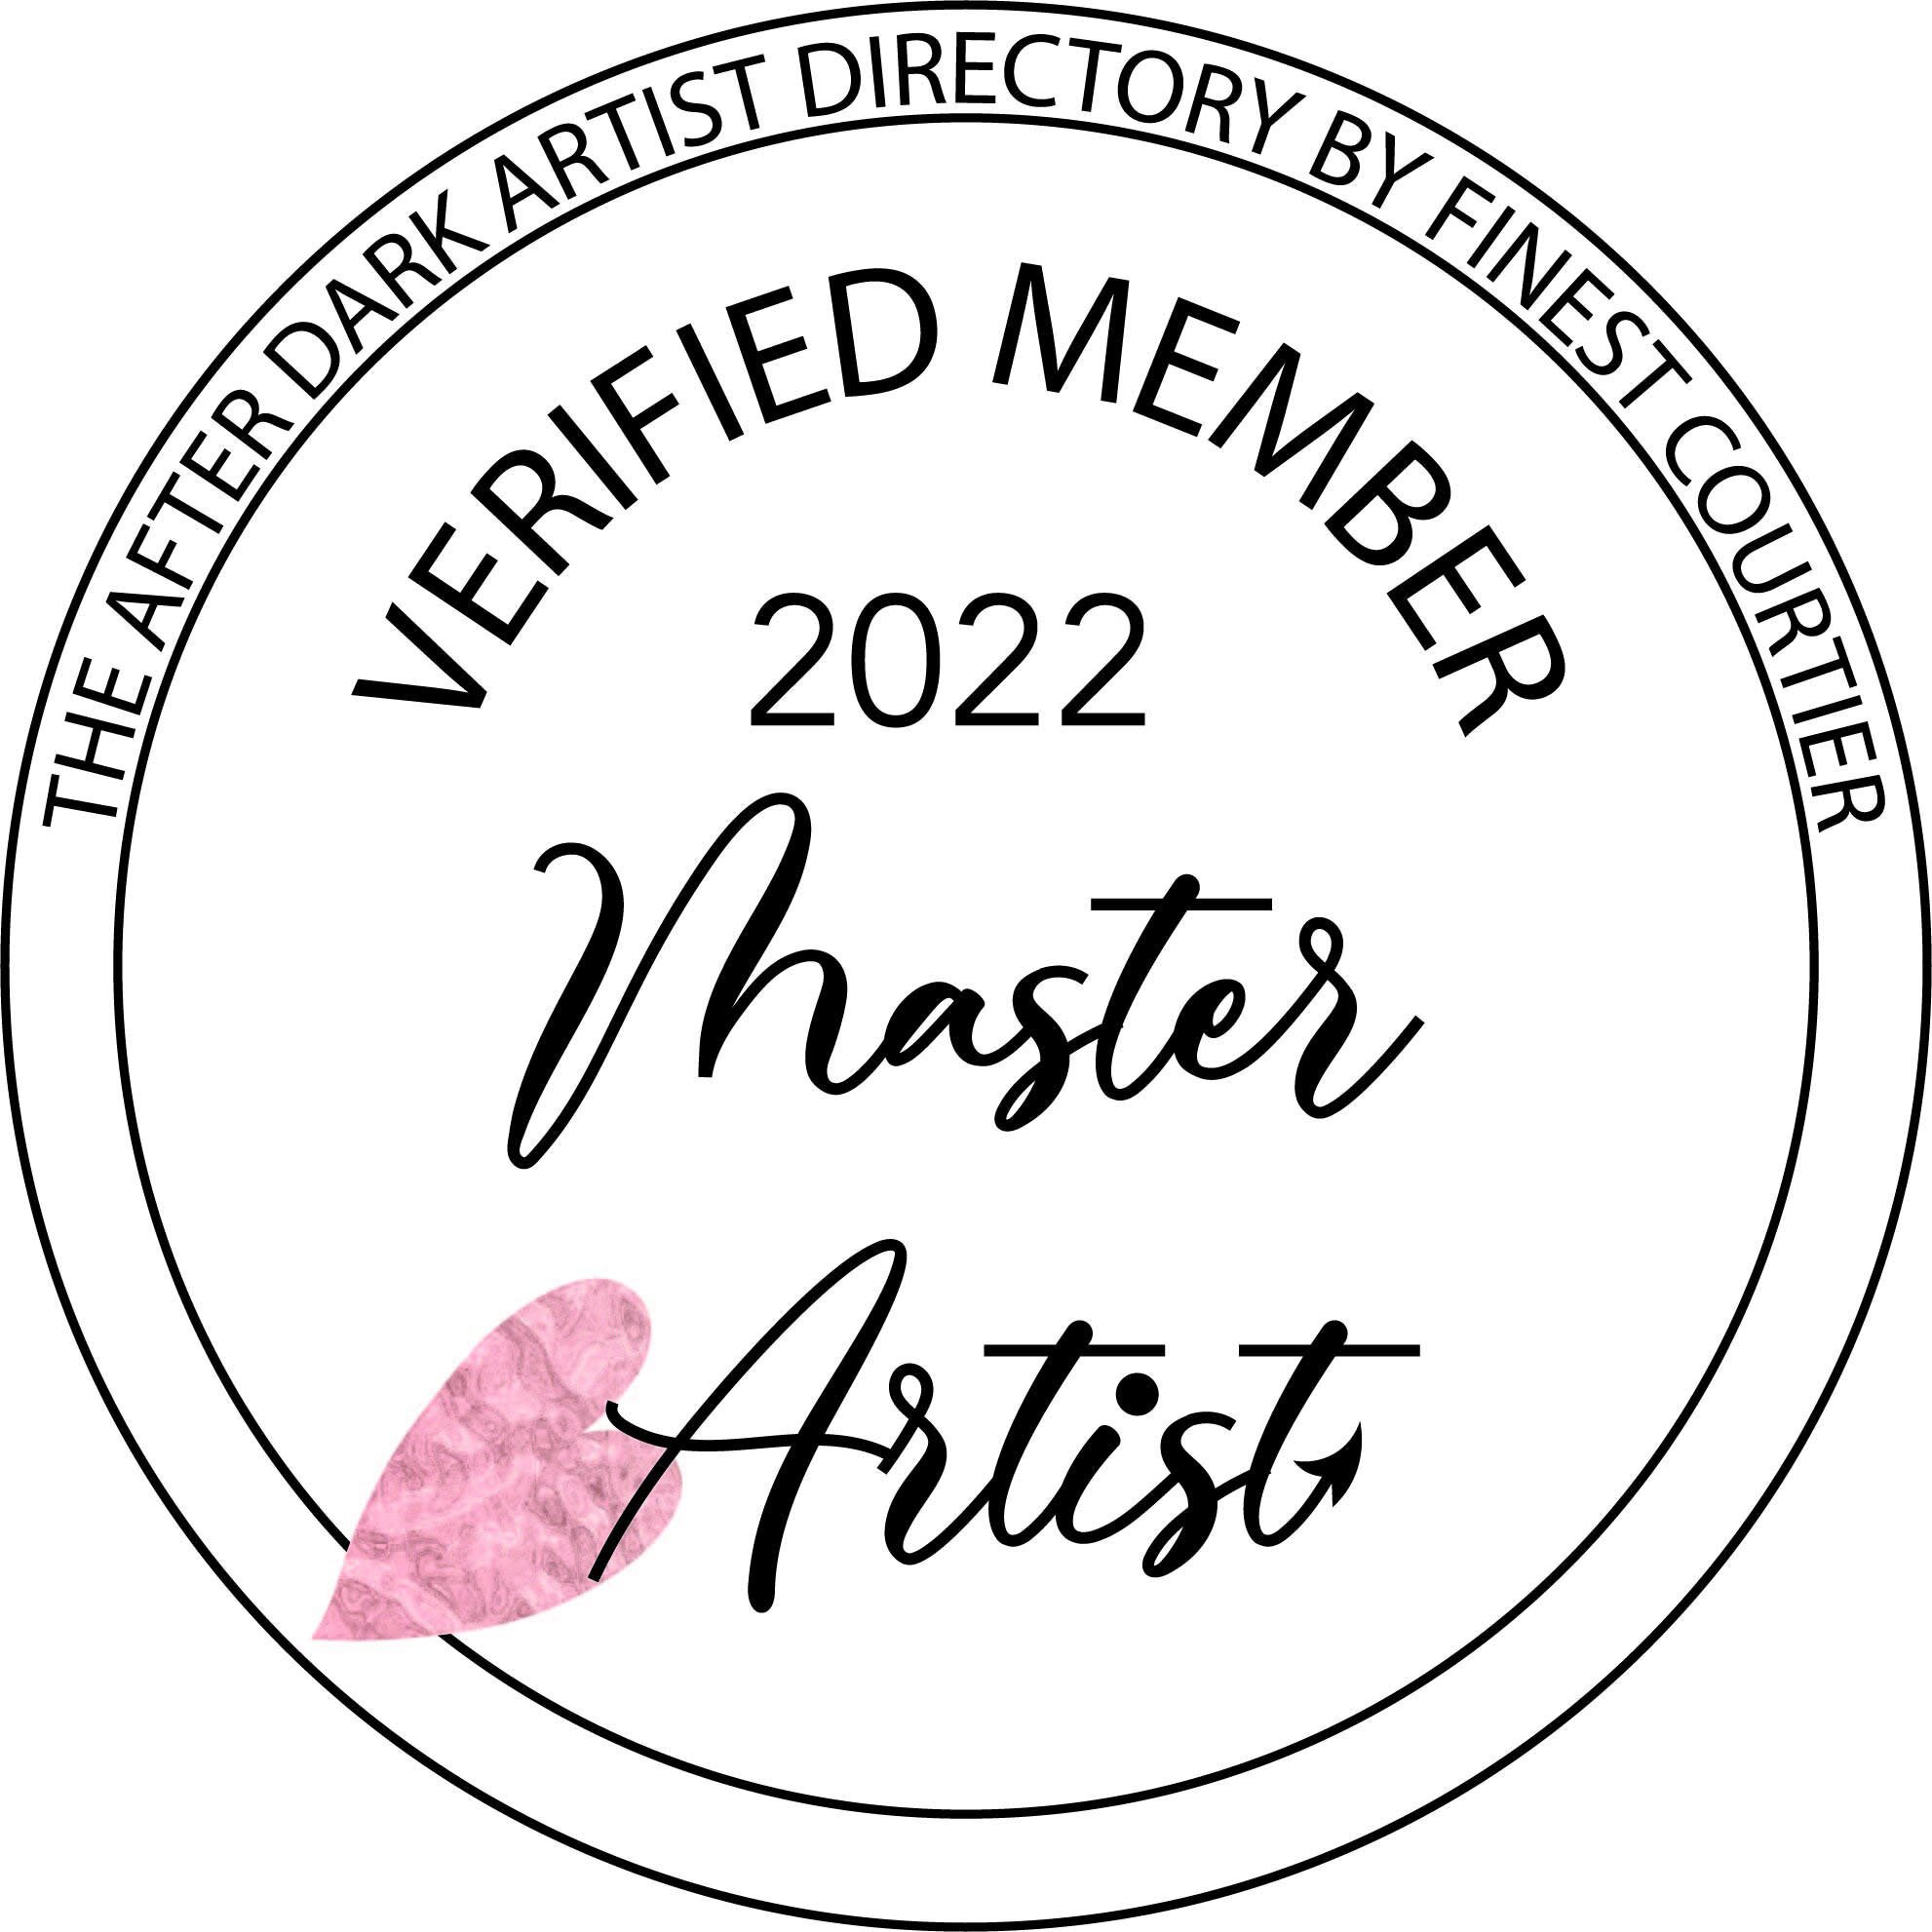 Master Artist Directory by Finest Courtier.jpeg